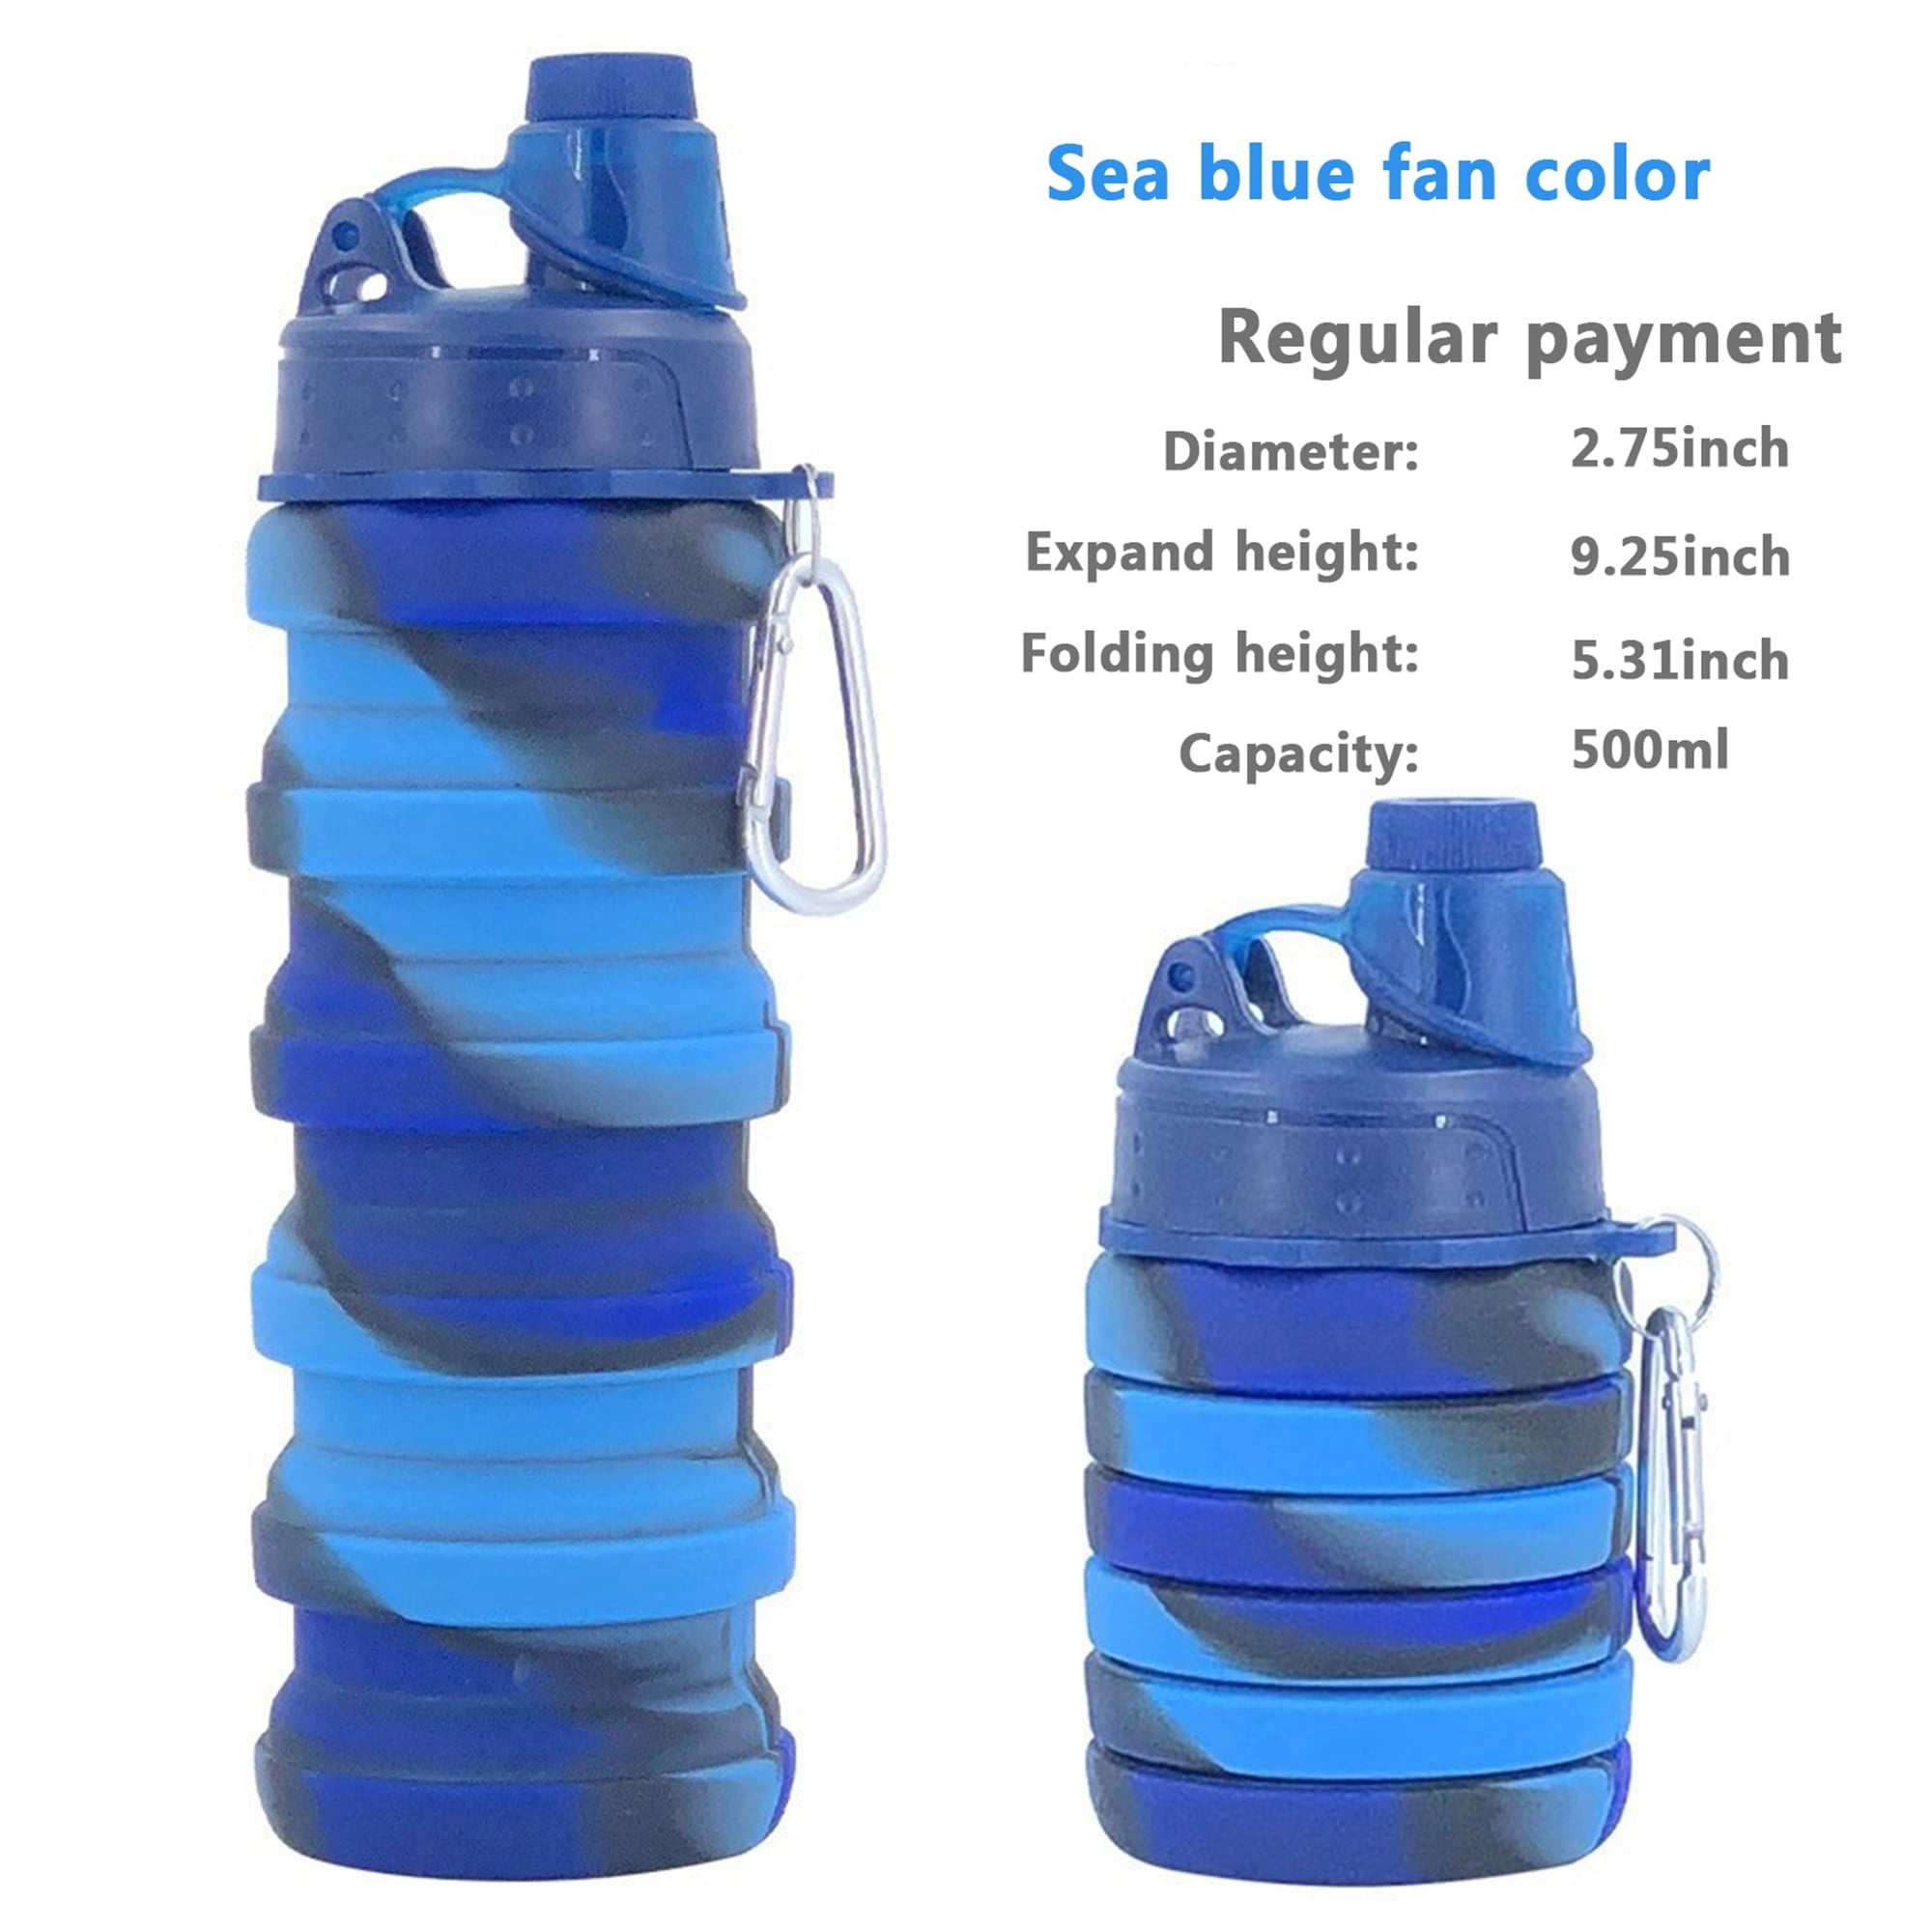 Loyerfyivos Reusable Water Bottle BPA-Free 44oz Water Bottles Leakproof Water Jugs Dishwasher Safe Drinking Water Bottles for Home Fitness Outdoor